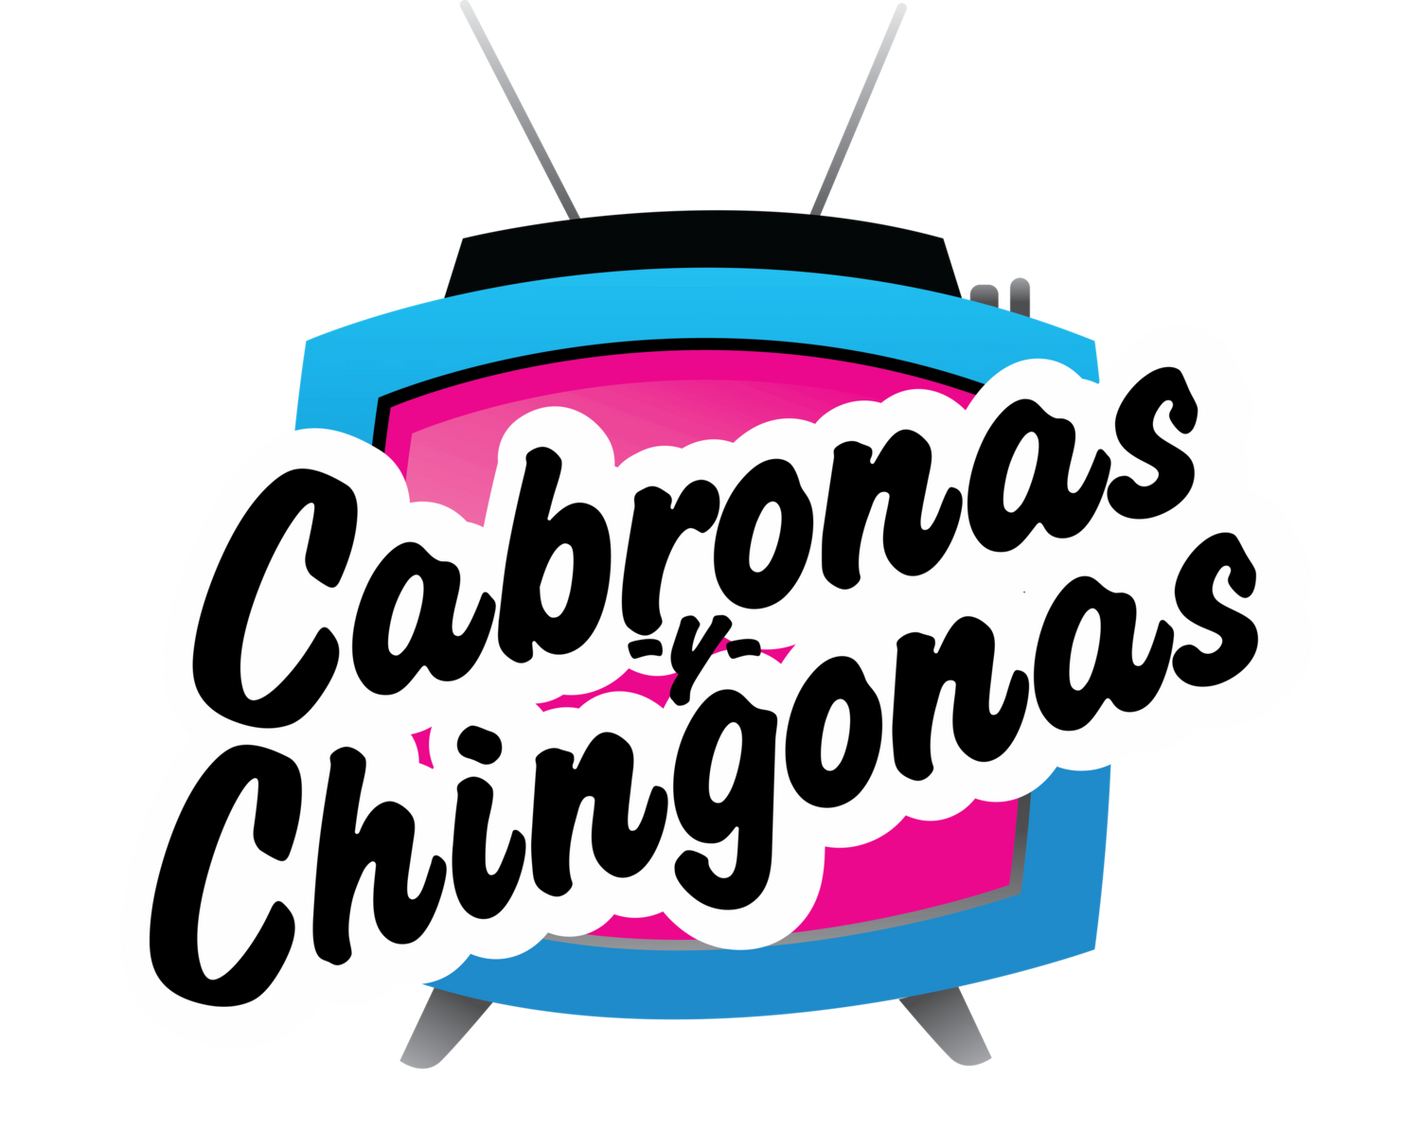 Cabronas y Chingonas Logo